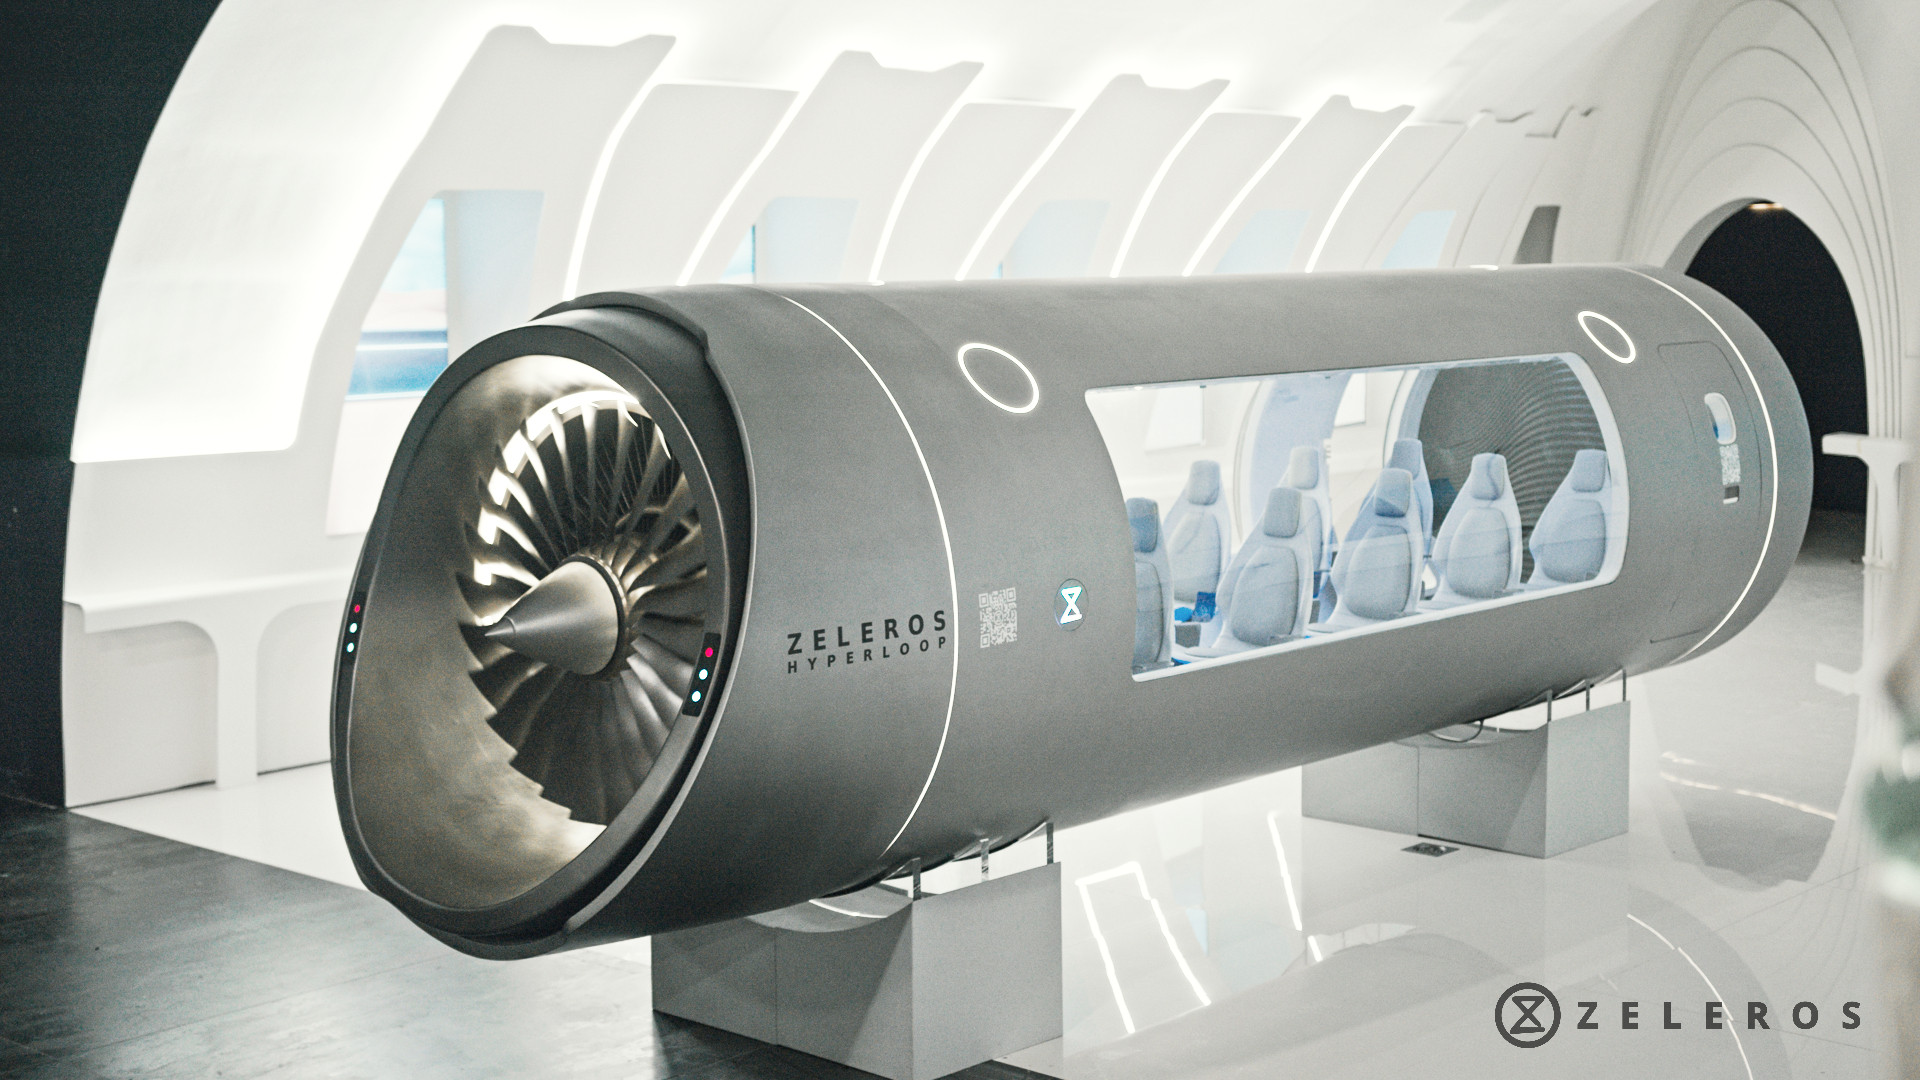 resized_Zeleros in Dubai Hyperloop at Spain Pavillion Expo 2020 Dubai